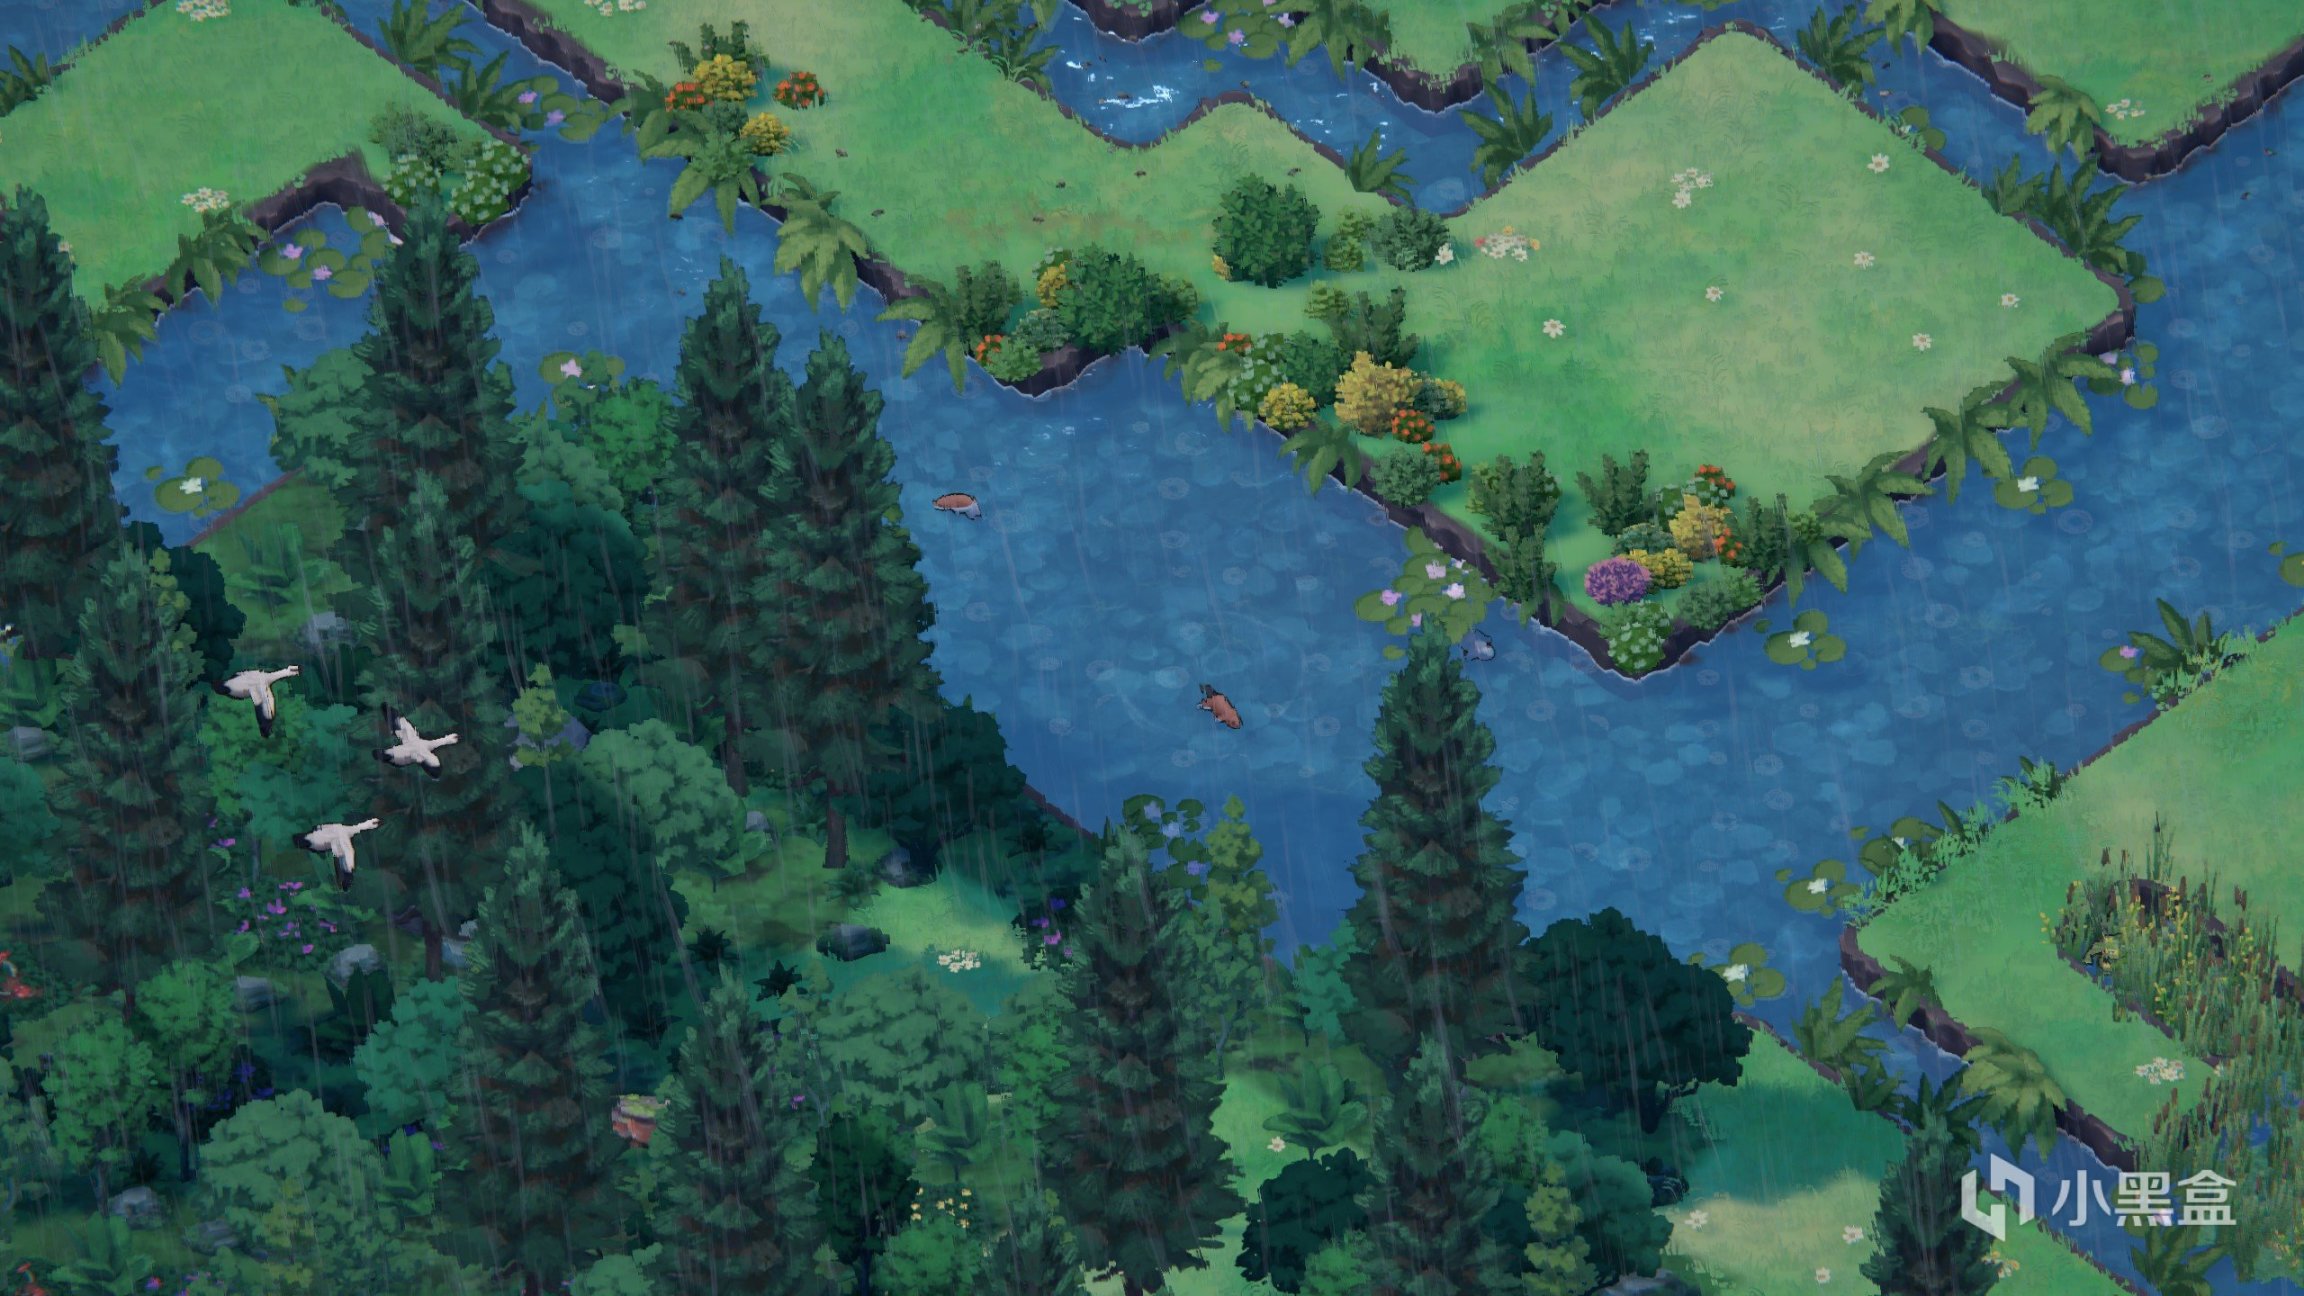 【PC游戏】环境保护题材游戏《伊始之地》：以科技重塑自然生态-第11张